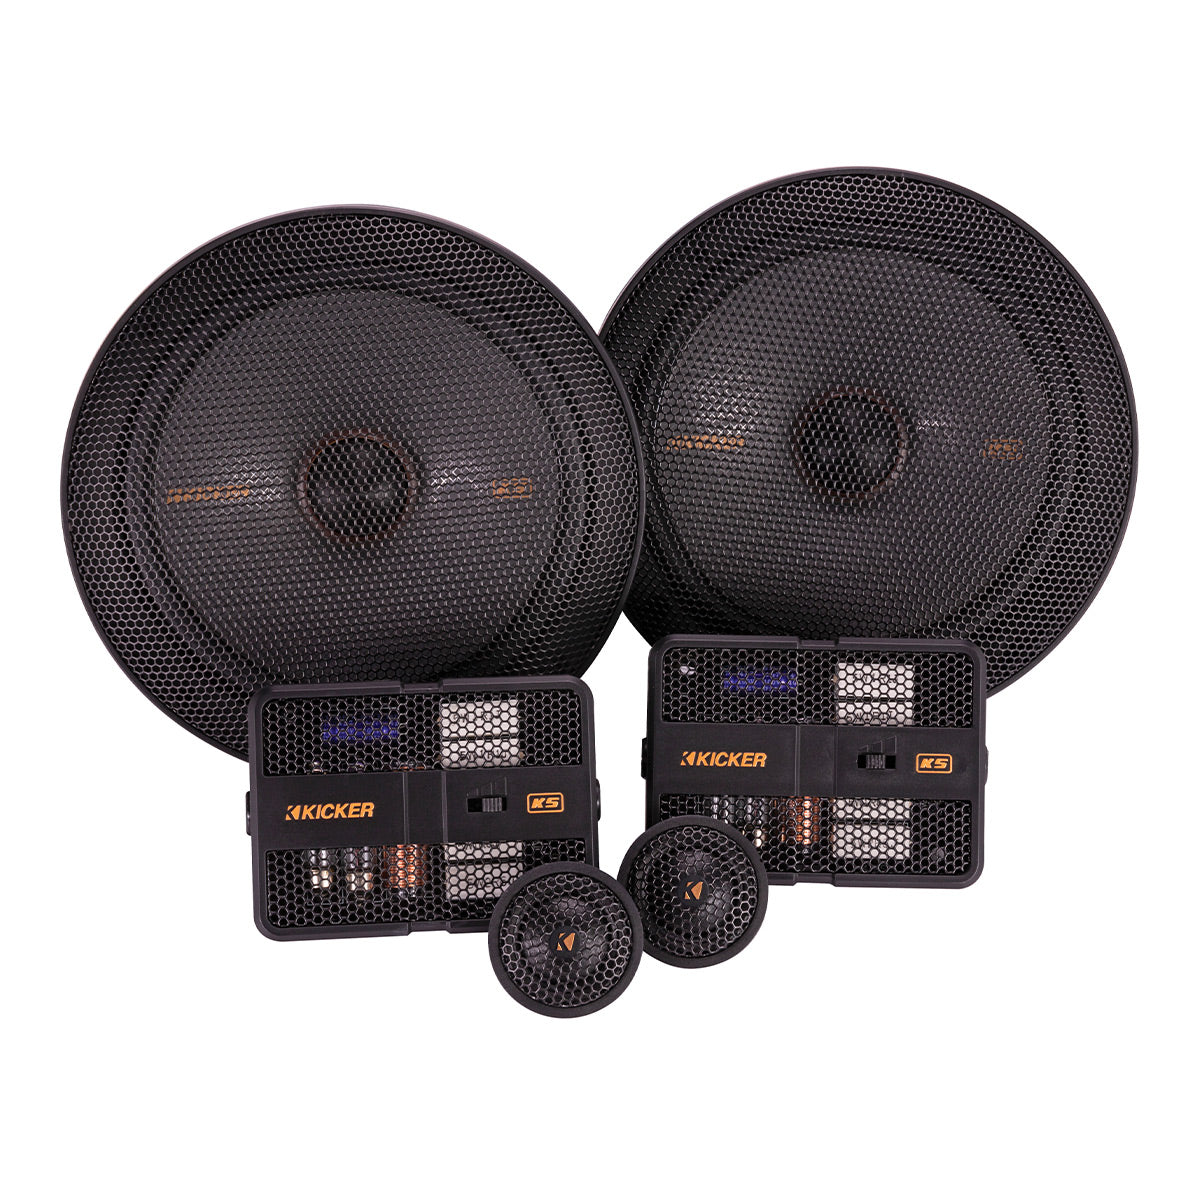 Kicker 51KSS6704 6.75" KS Series Component Speaker System